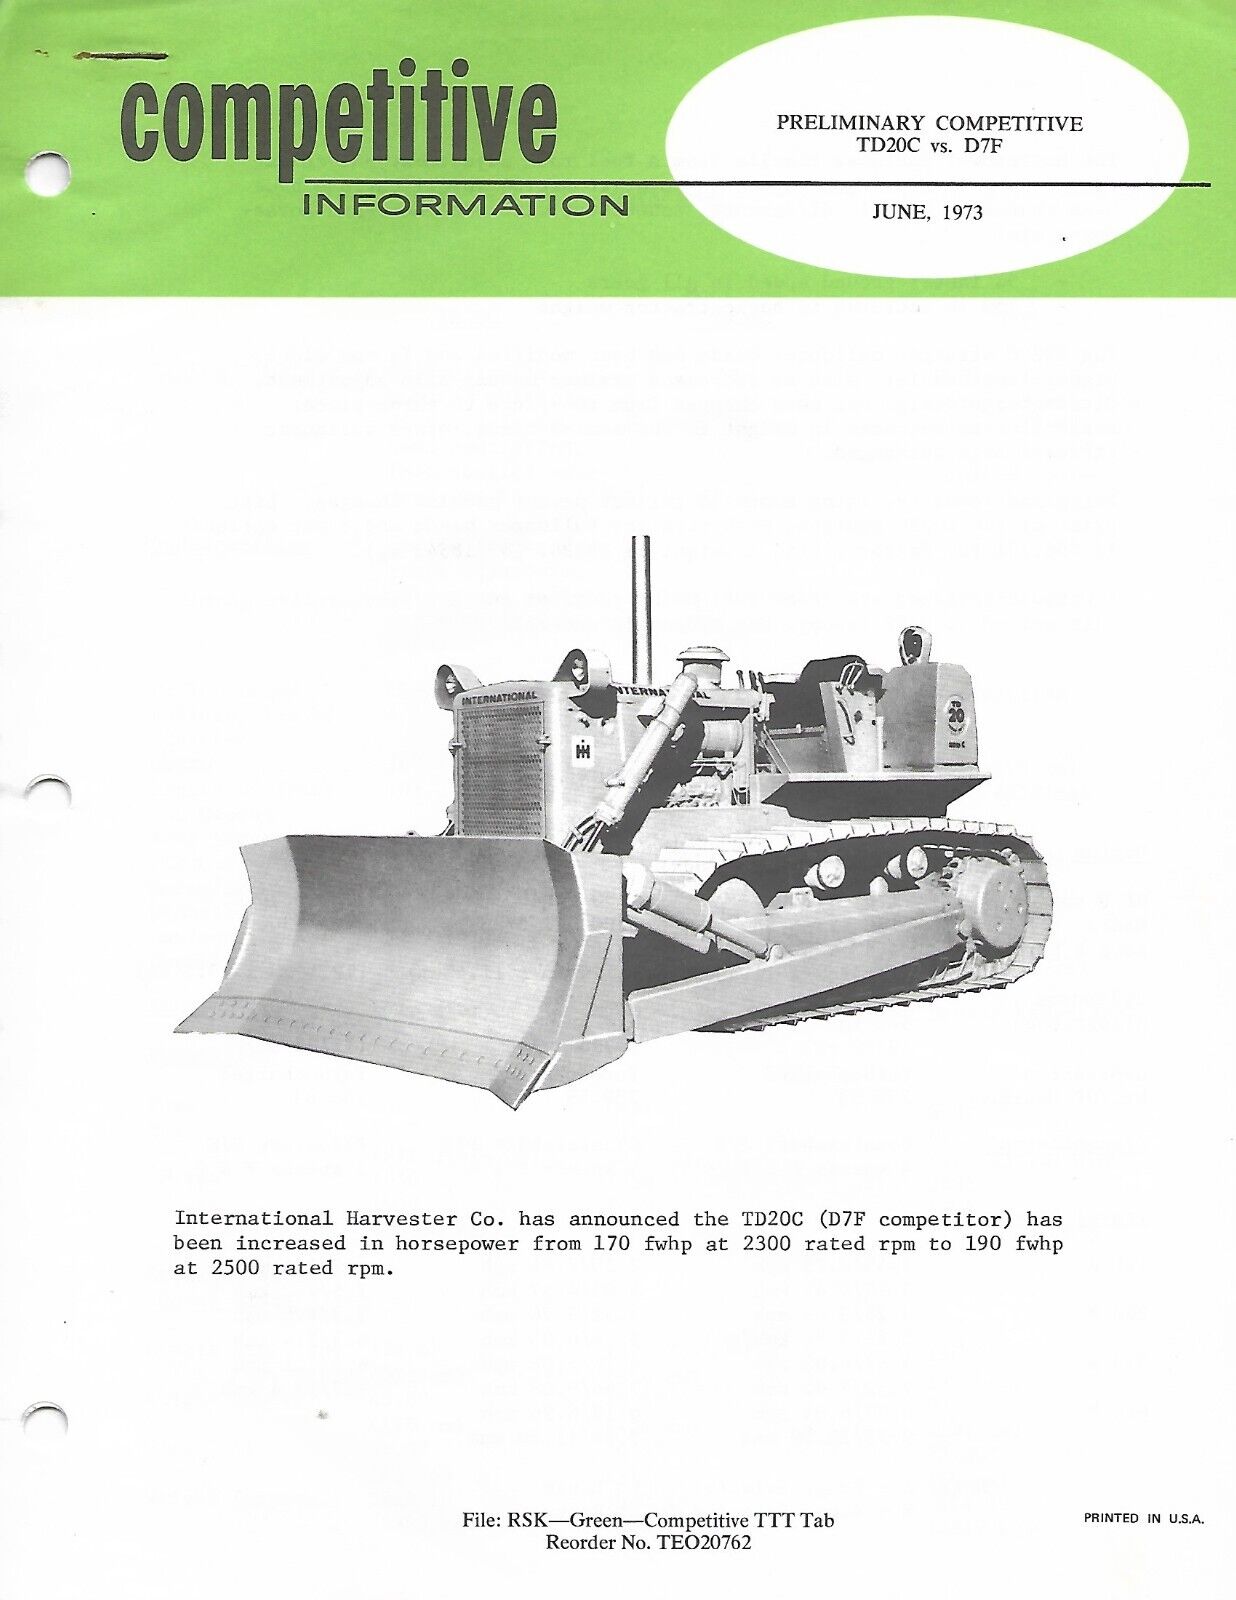 Equipment Brochure - Caterpillar D7F Vs IH TD-20C - Crawler Tractor 1973 (E8073)